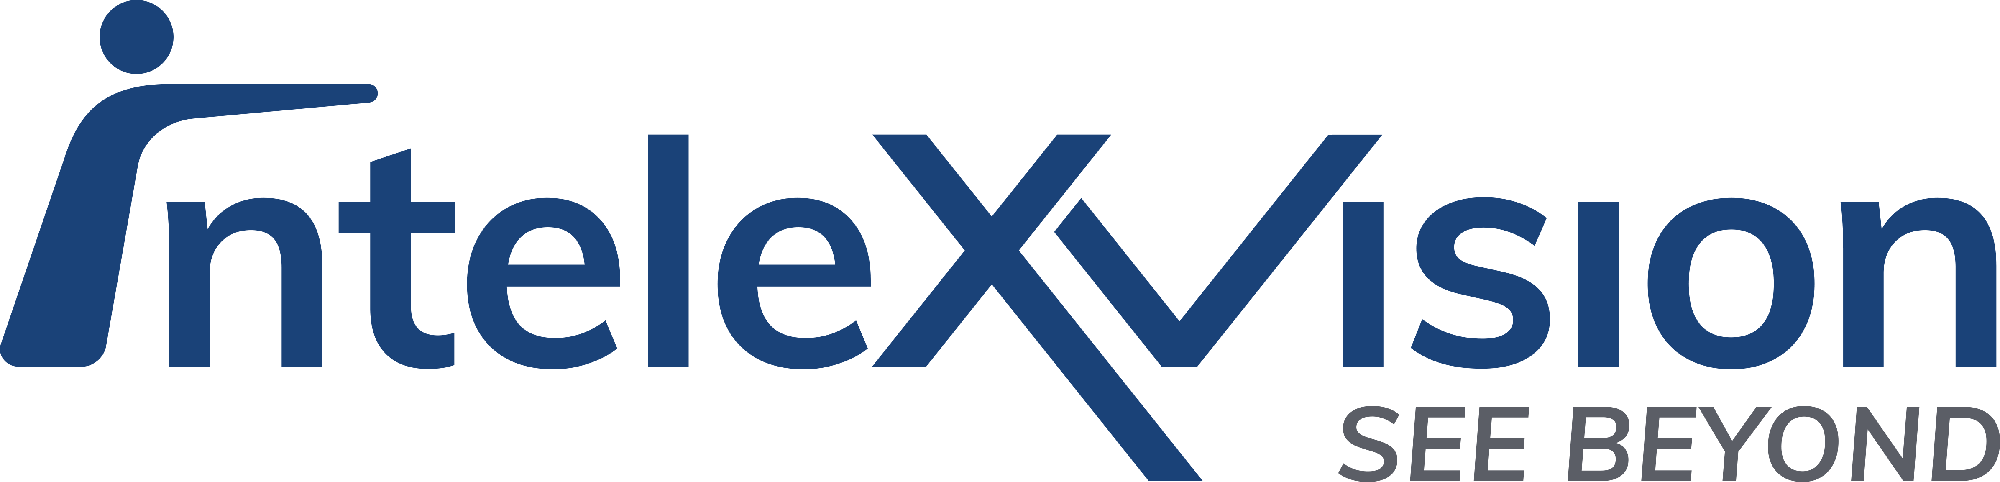 Intelexvision logo